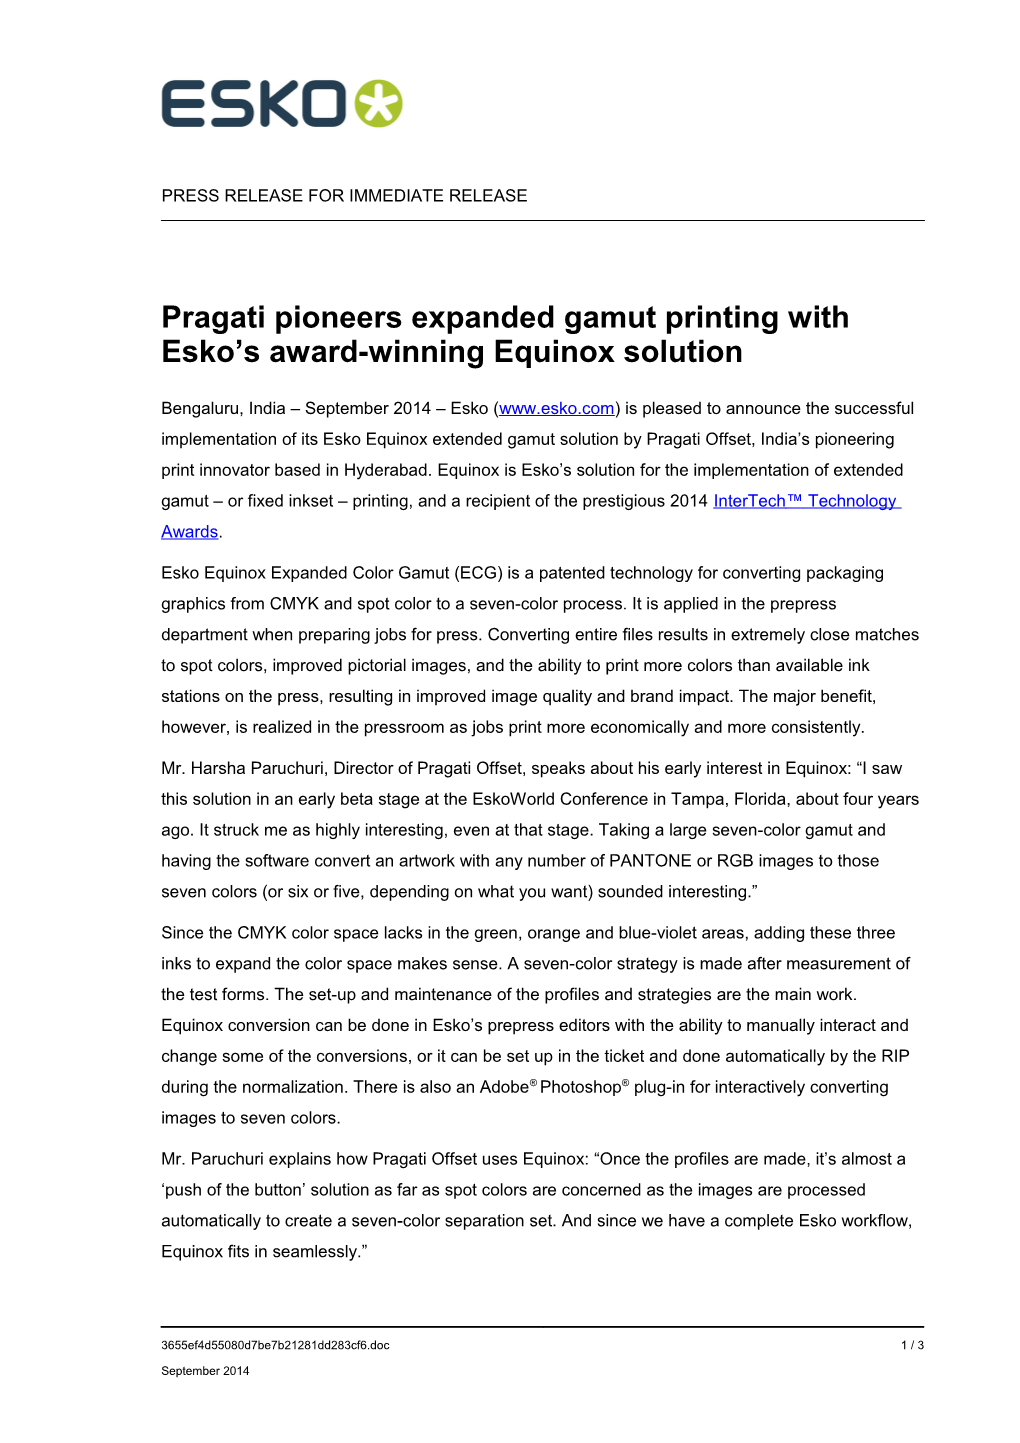 Pragati Pioneers Expanded Gamut Printing with Esko S Award-Winning Equinox Solution